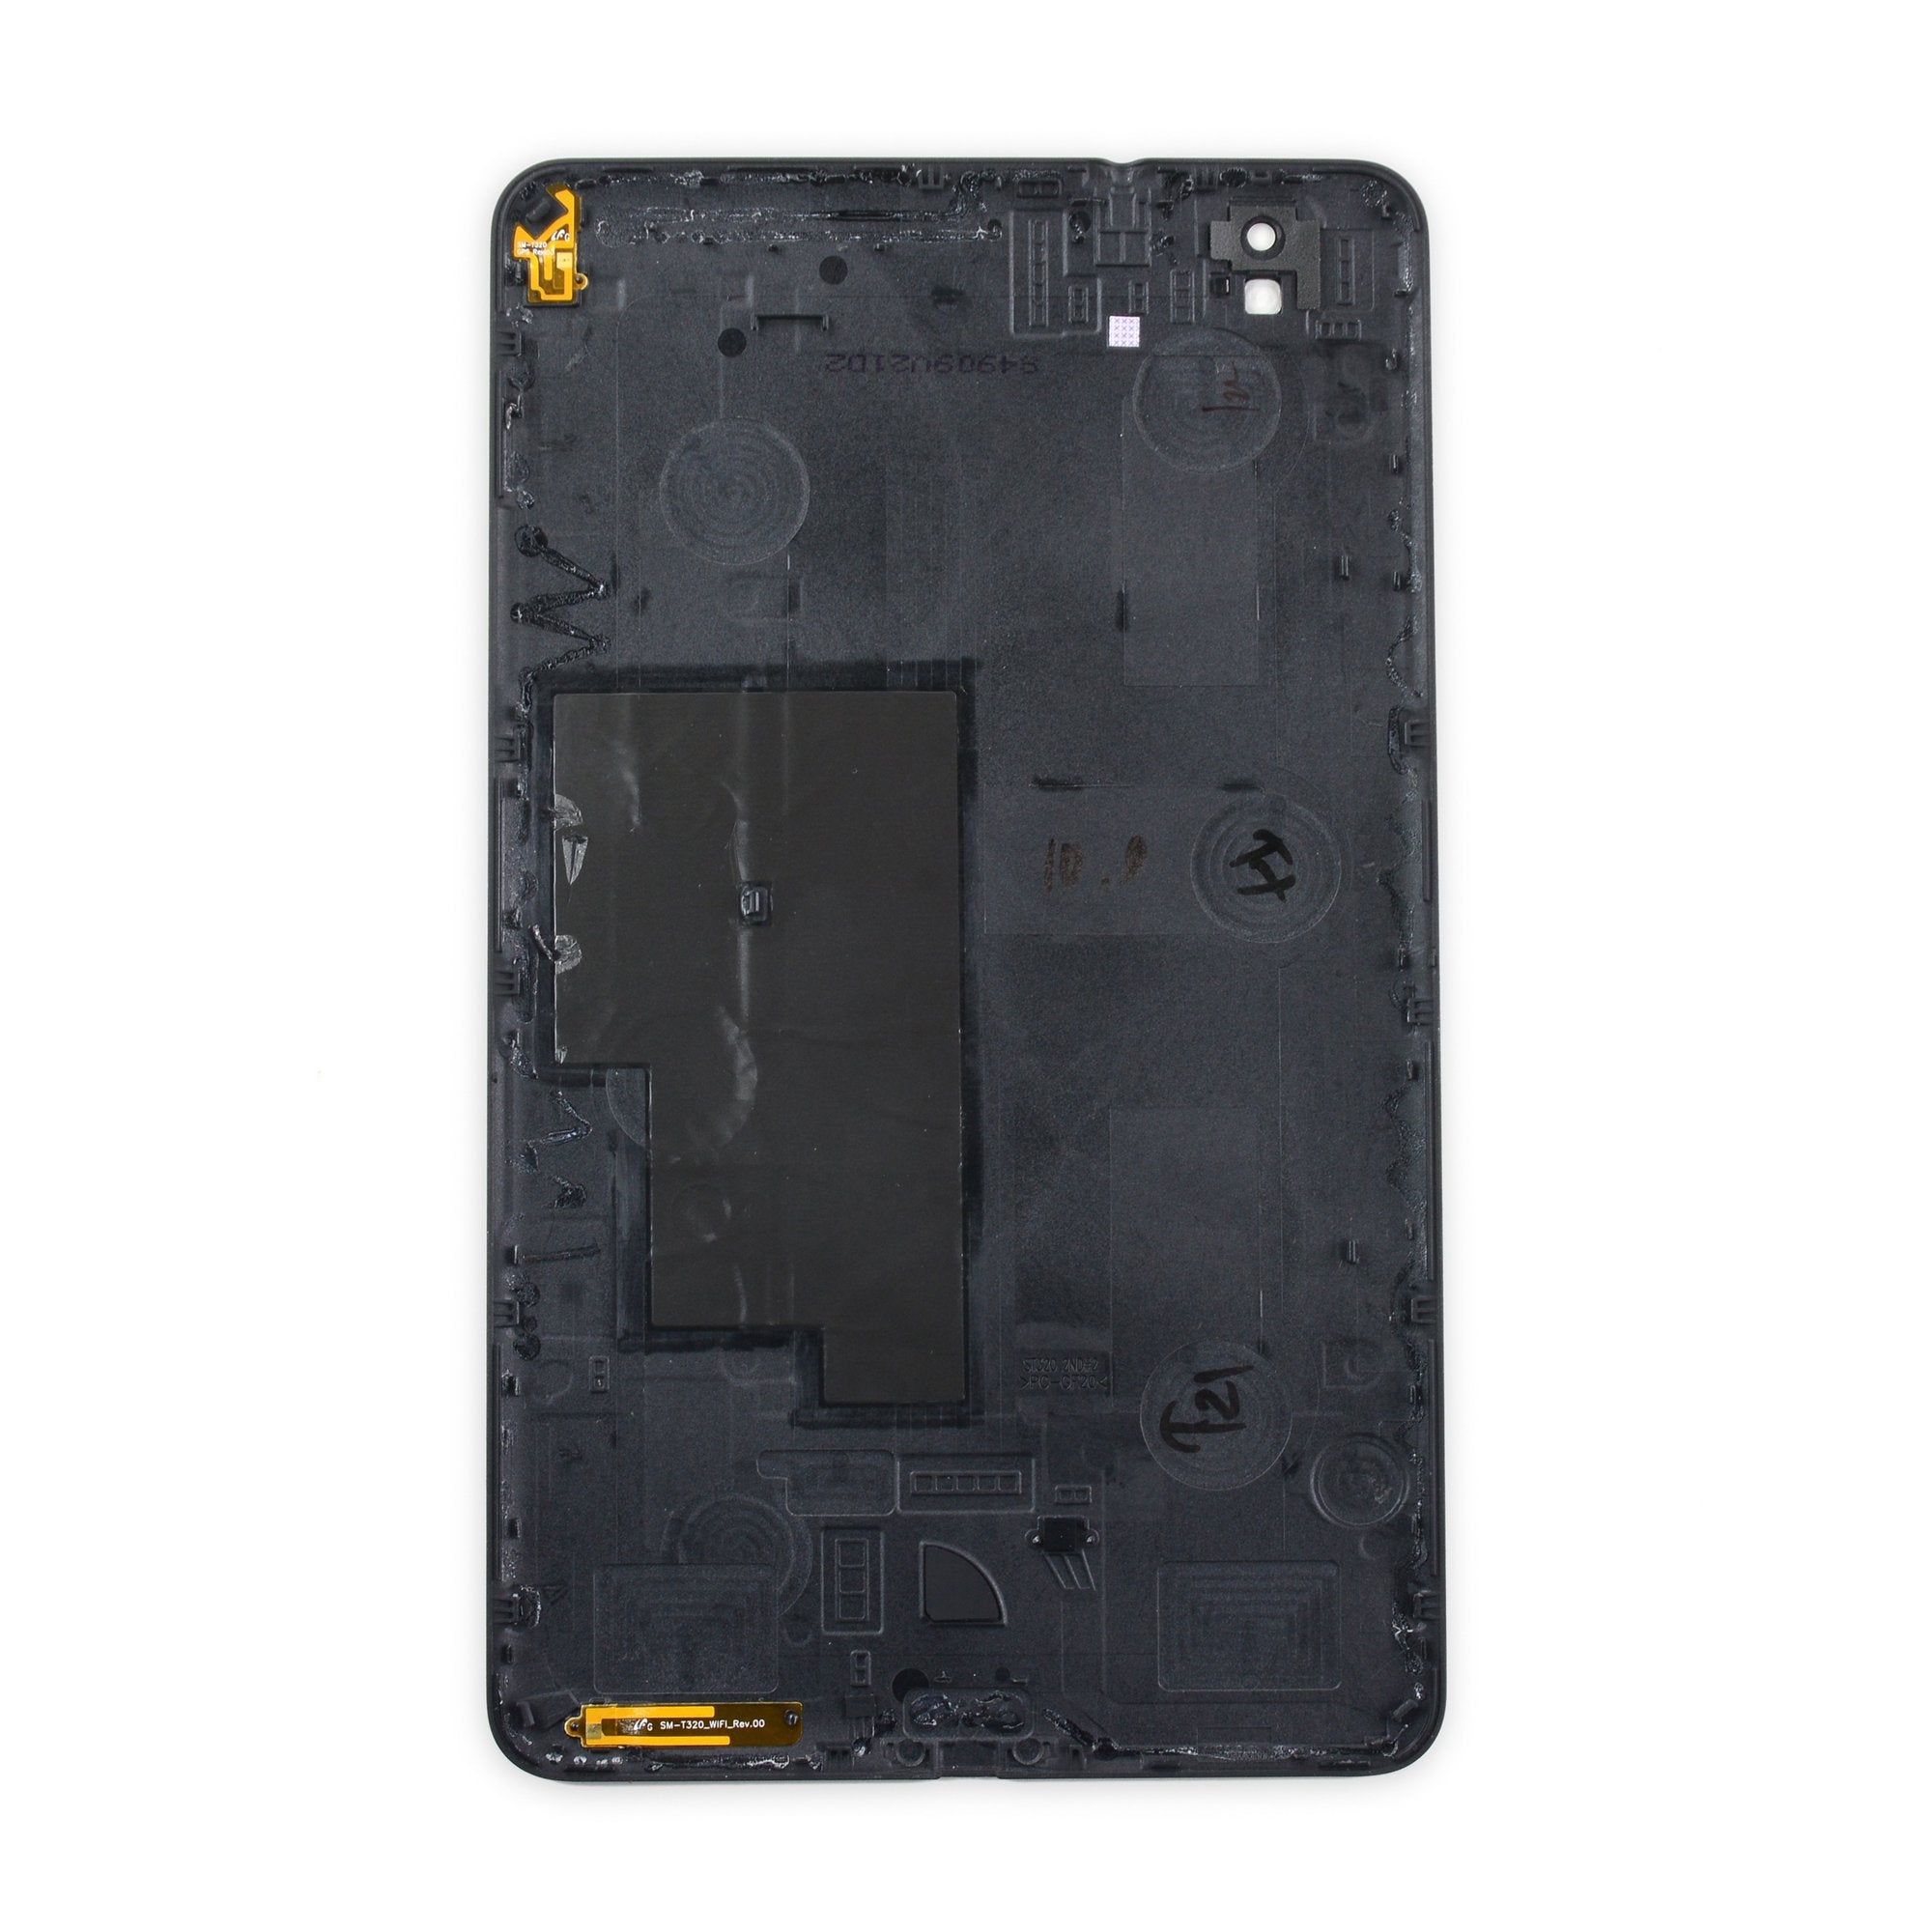 Galaxy Tab Pro 8.4 Rear Panel Black Used, A-Stock